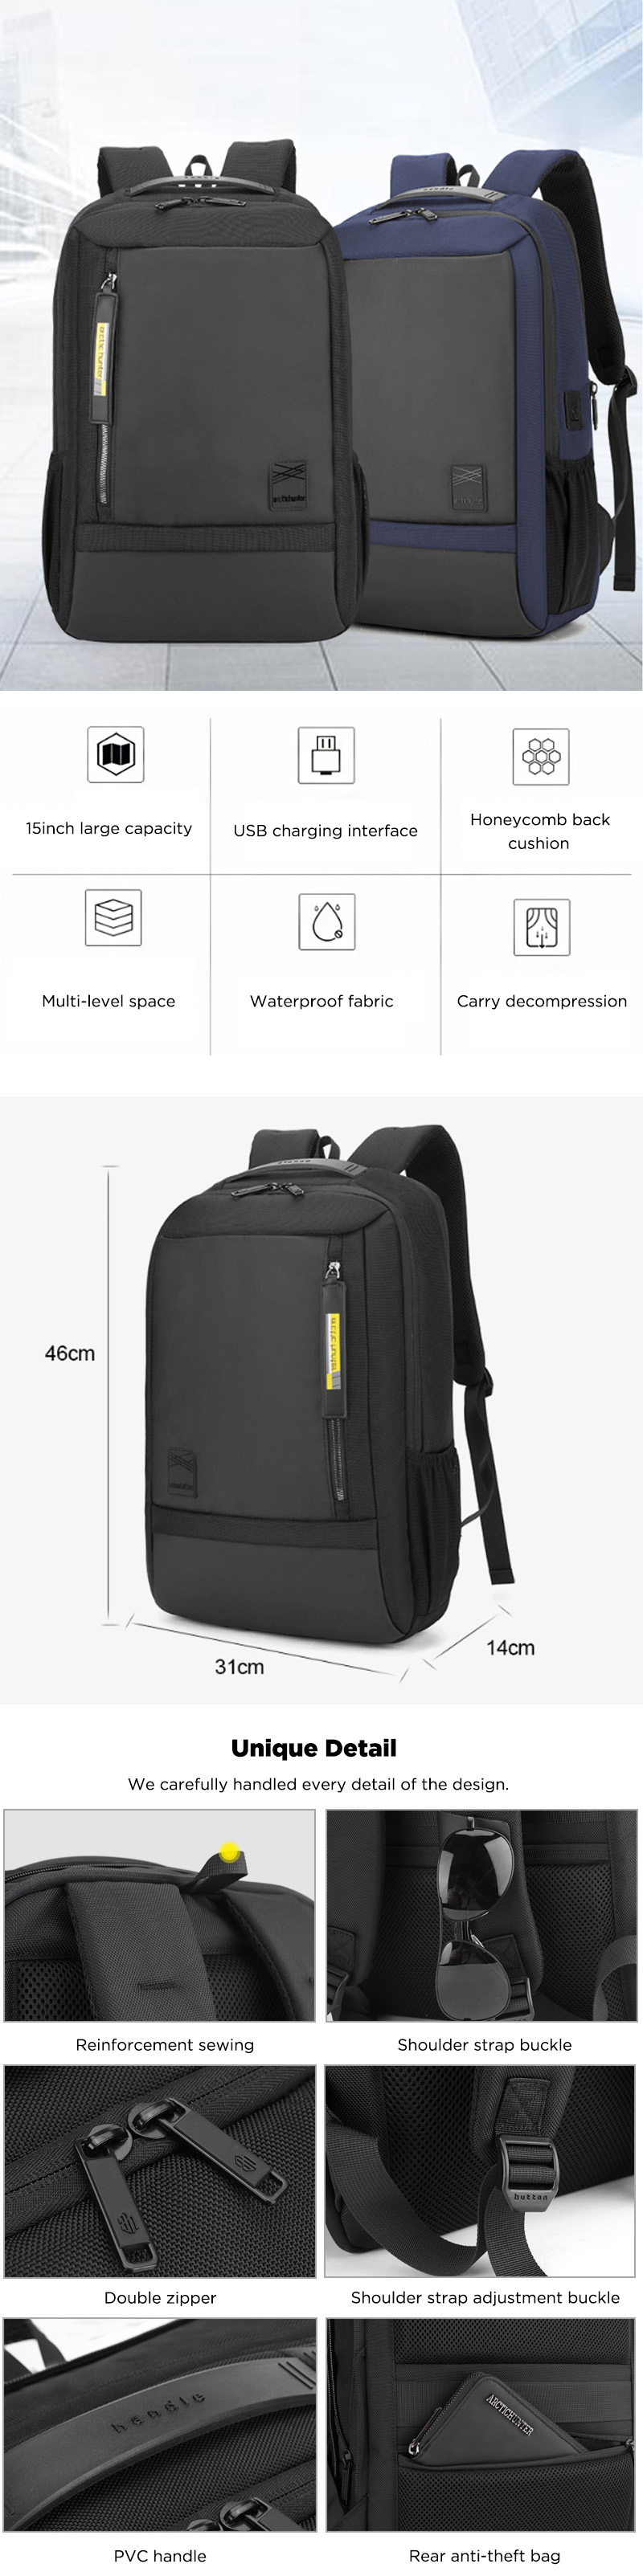 ARCTIC-HUNTER-35L-Backpack-156inch-Laptop-Bag-Men-School-Bag-Waterproof-Shoulder-Bag-Camping-Travel--1611868-1